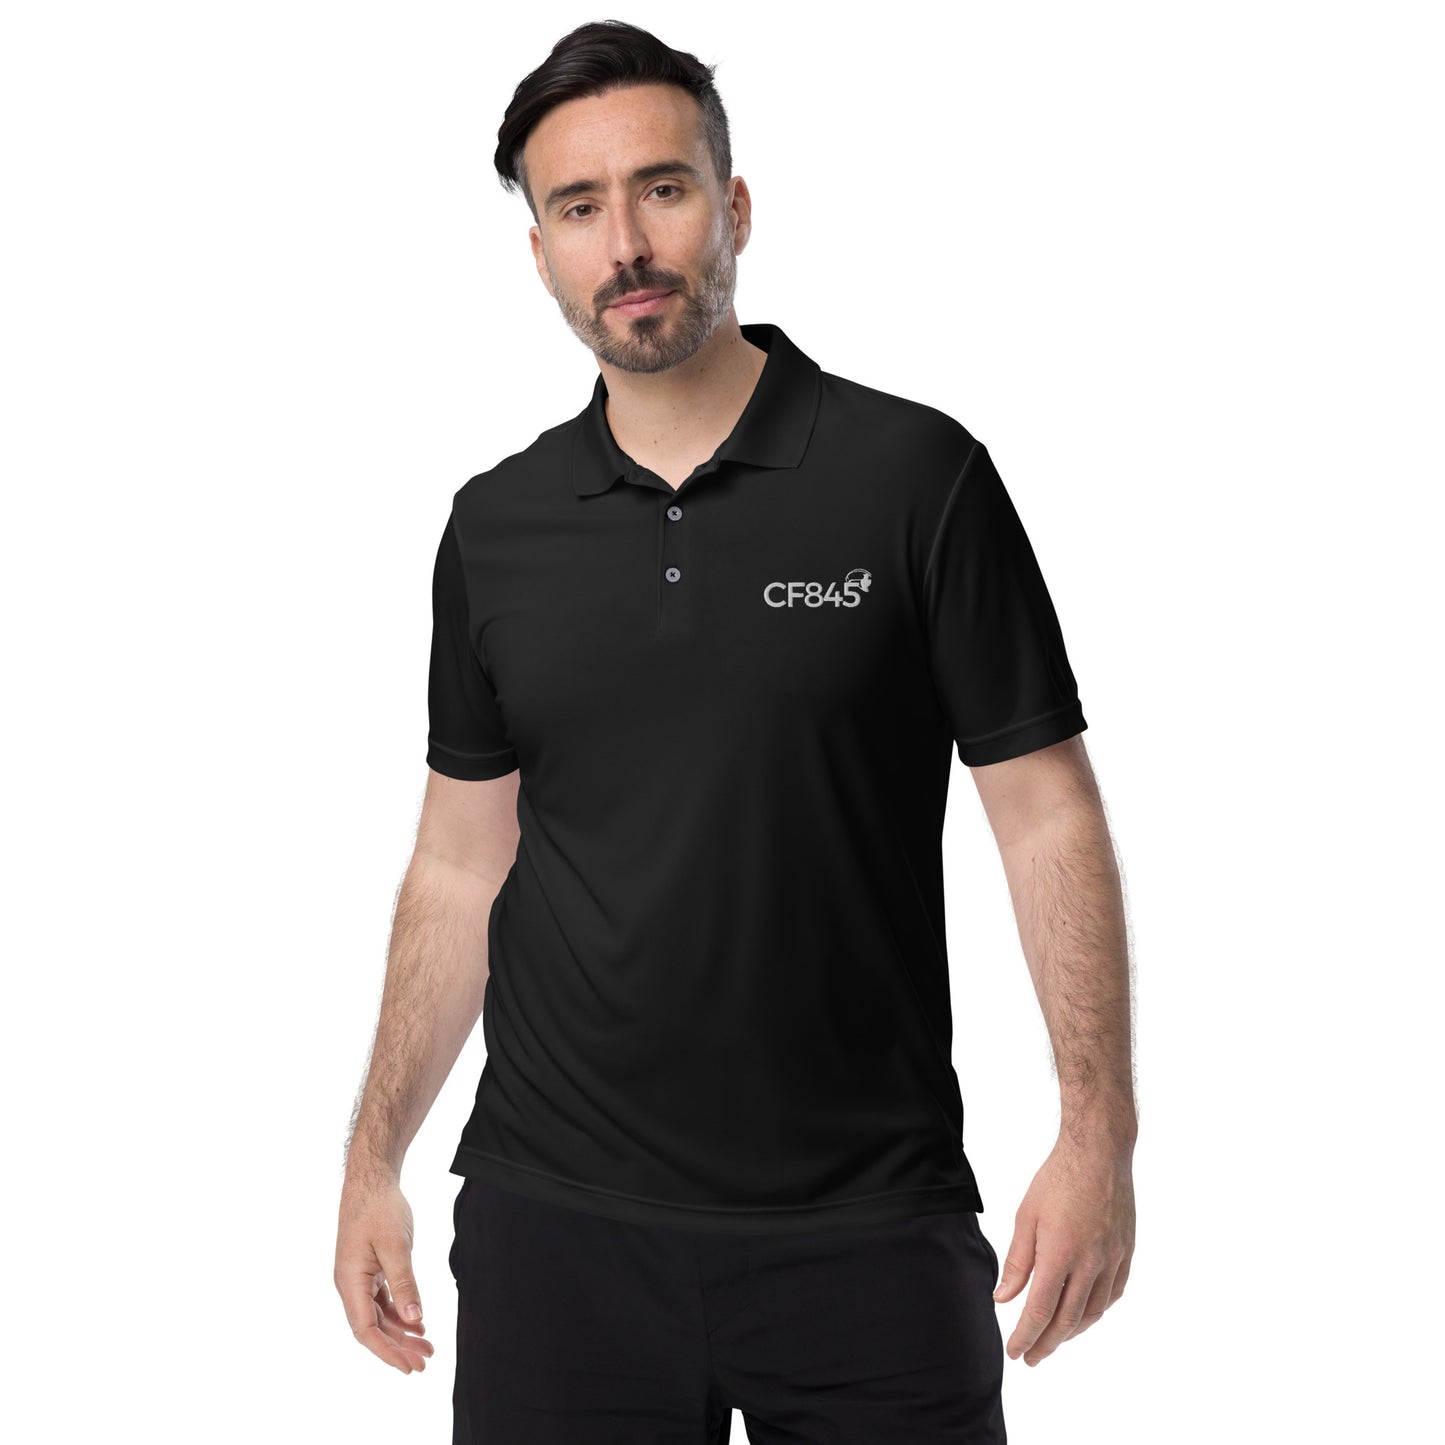 Adidas Performance Golf Shirt